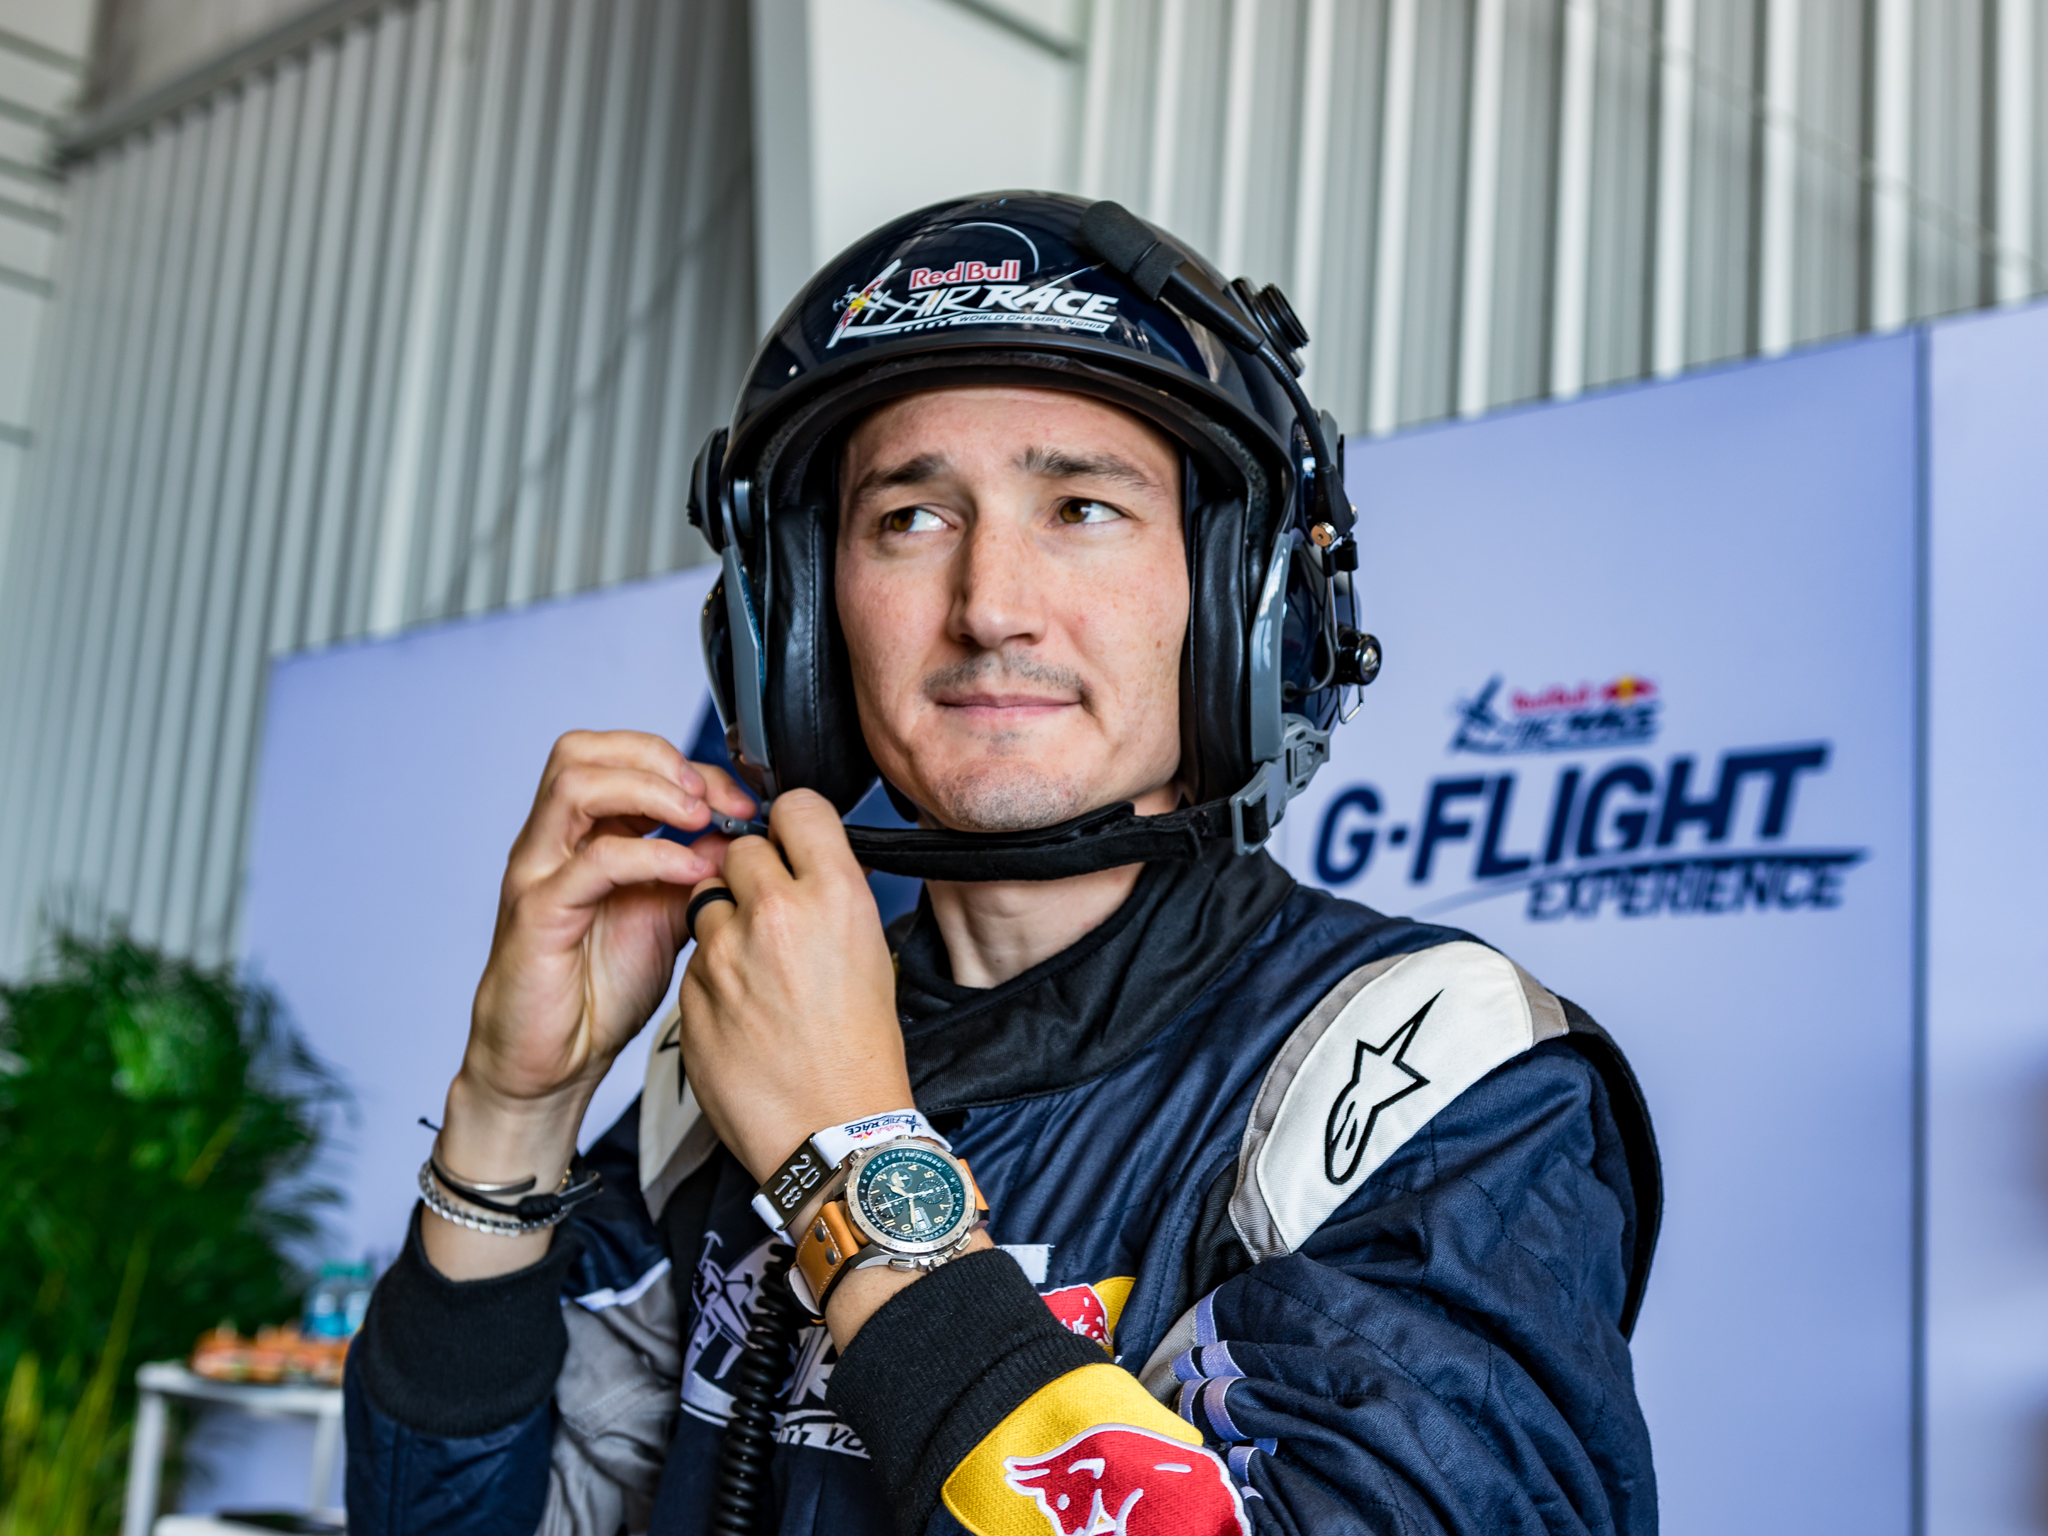 Hamilton Watches Red Bull Air Race G-Flight